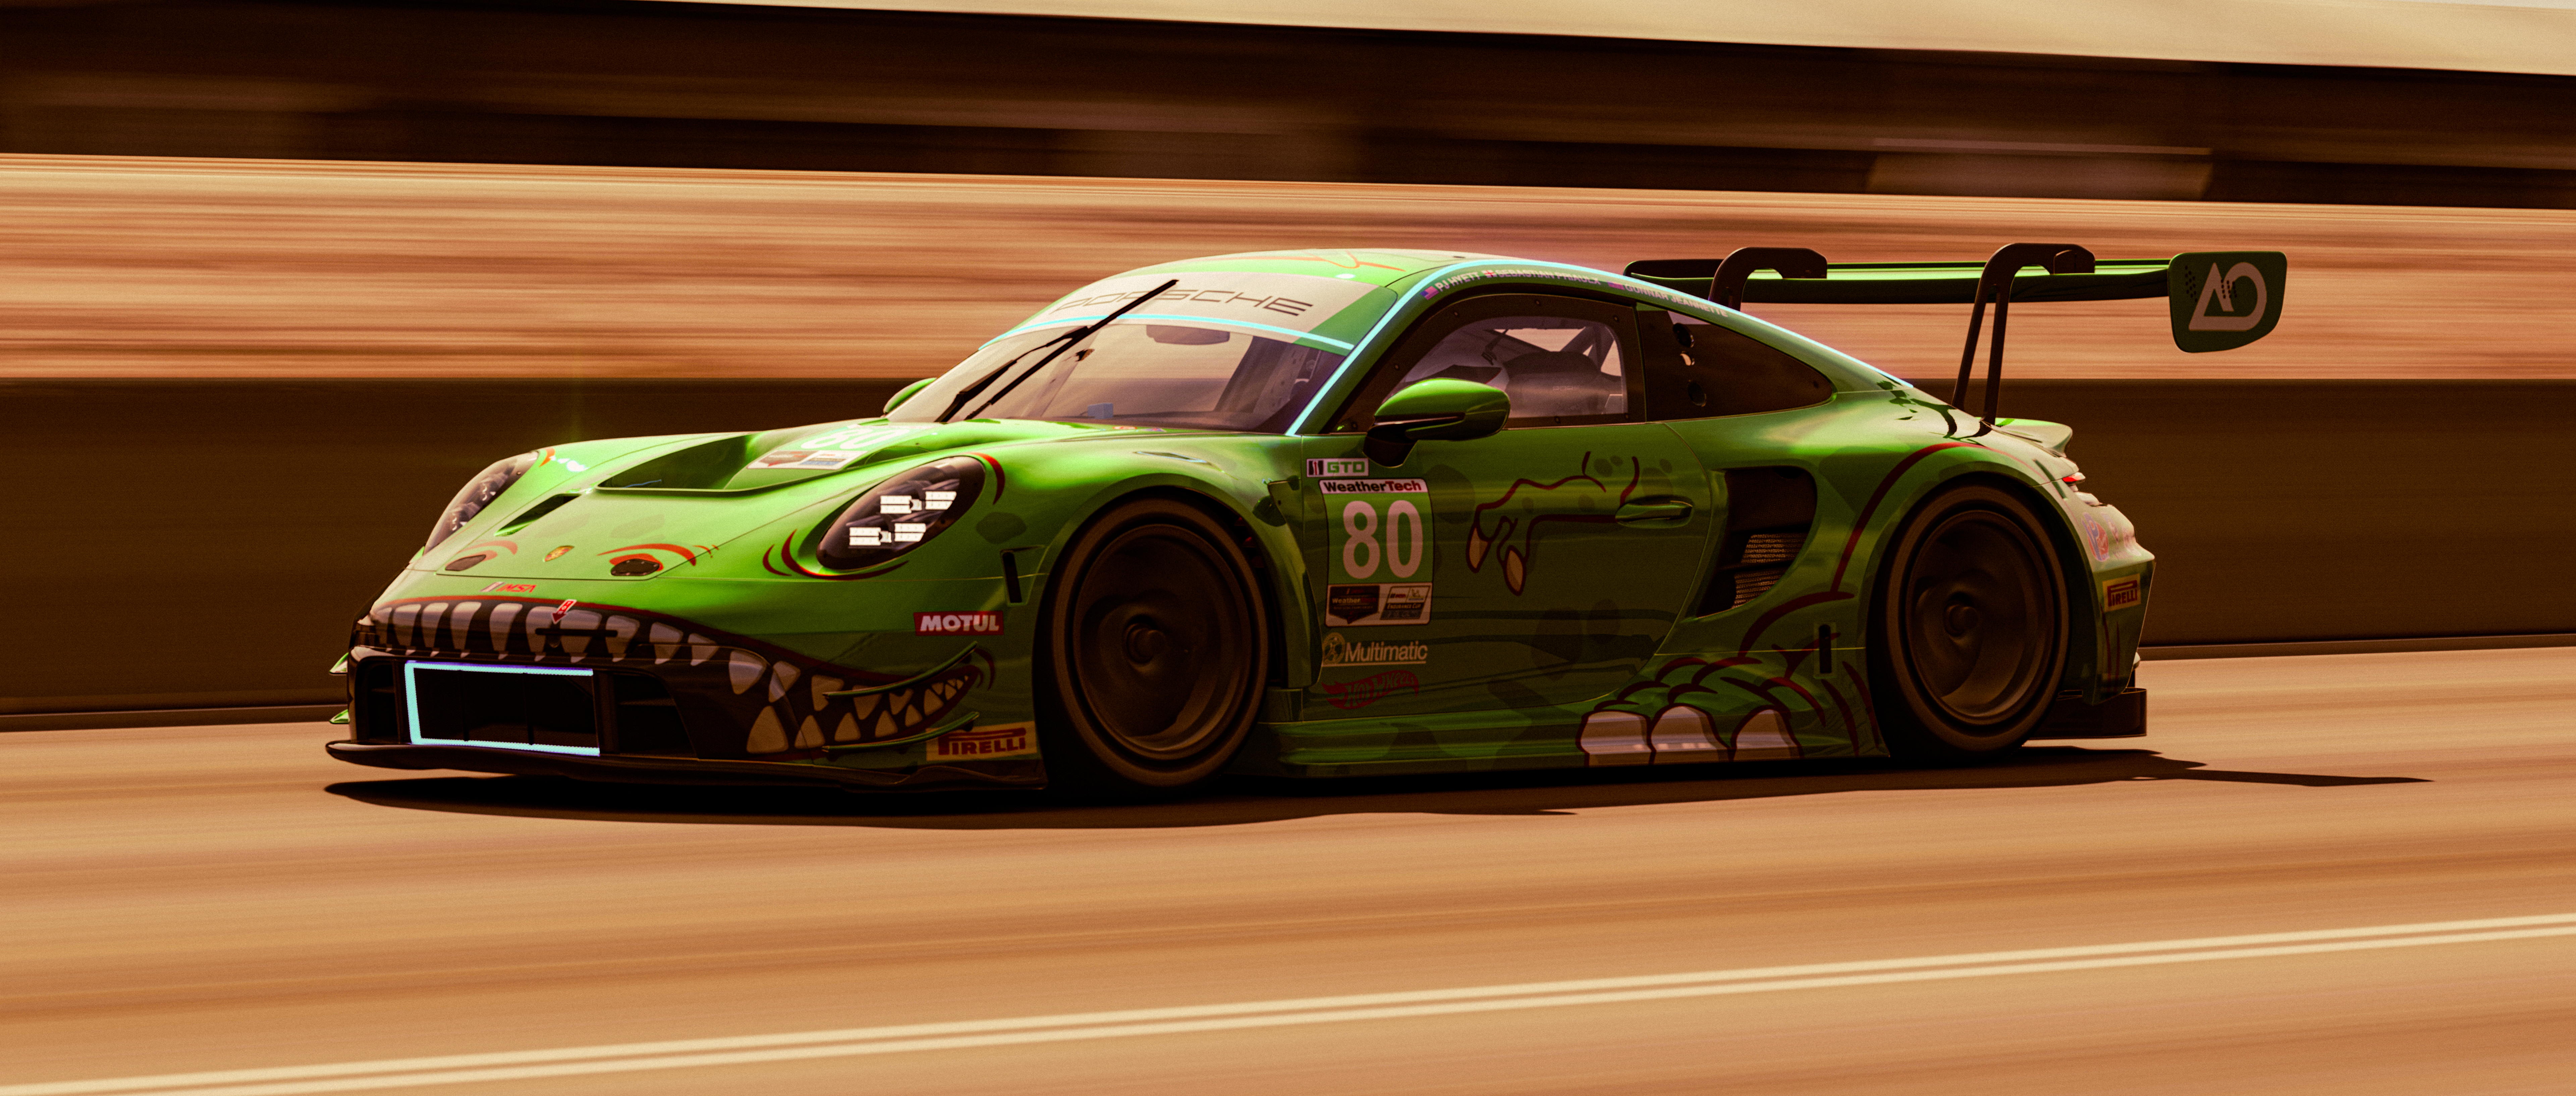 Assetto Corsa PC Gaming FiA World Endurance Championship Road Car Race Cars GT3 Racing Porsche Front 7680x3269